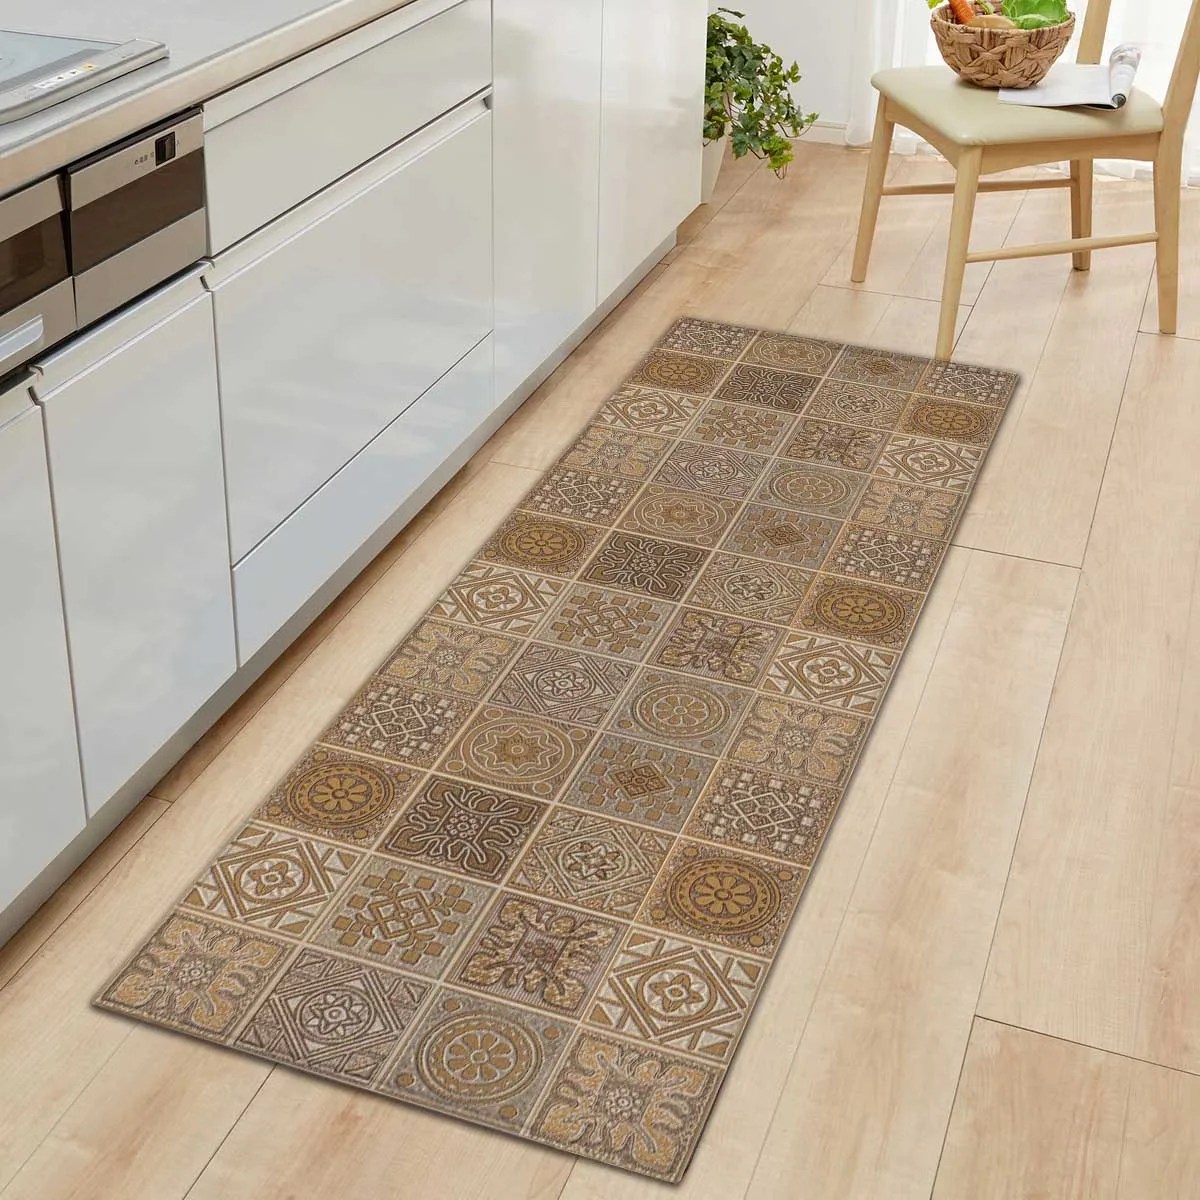 

Tiles Pattern Home Bath Mat Carpet Flannel Entrance Door Mat Soft Floor Rugs for Living Room Bedroom Kitchen Bathroom